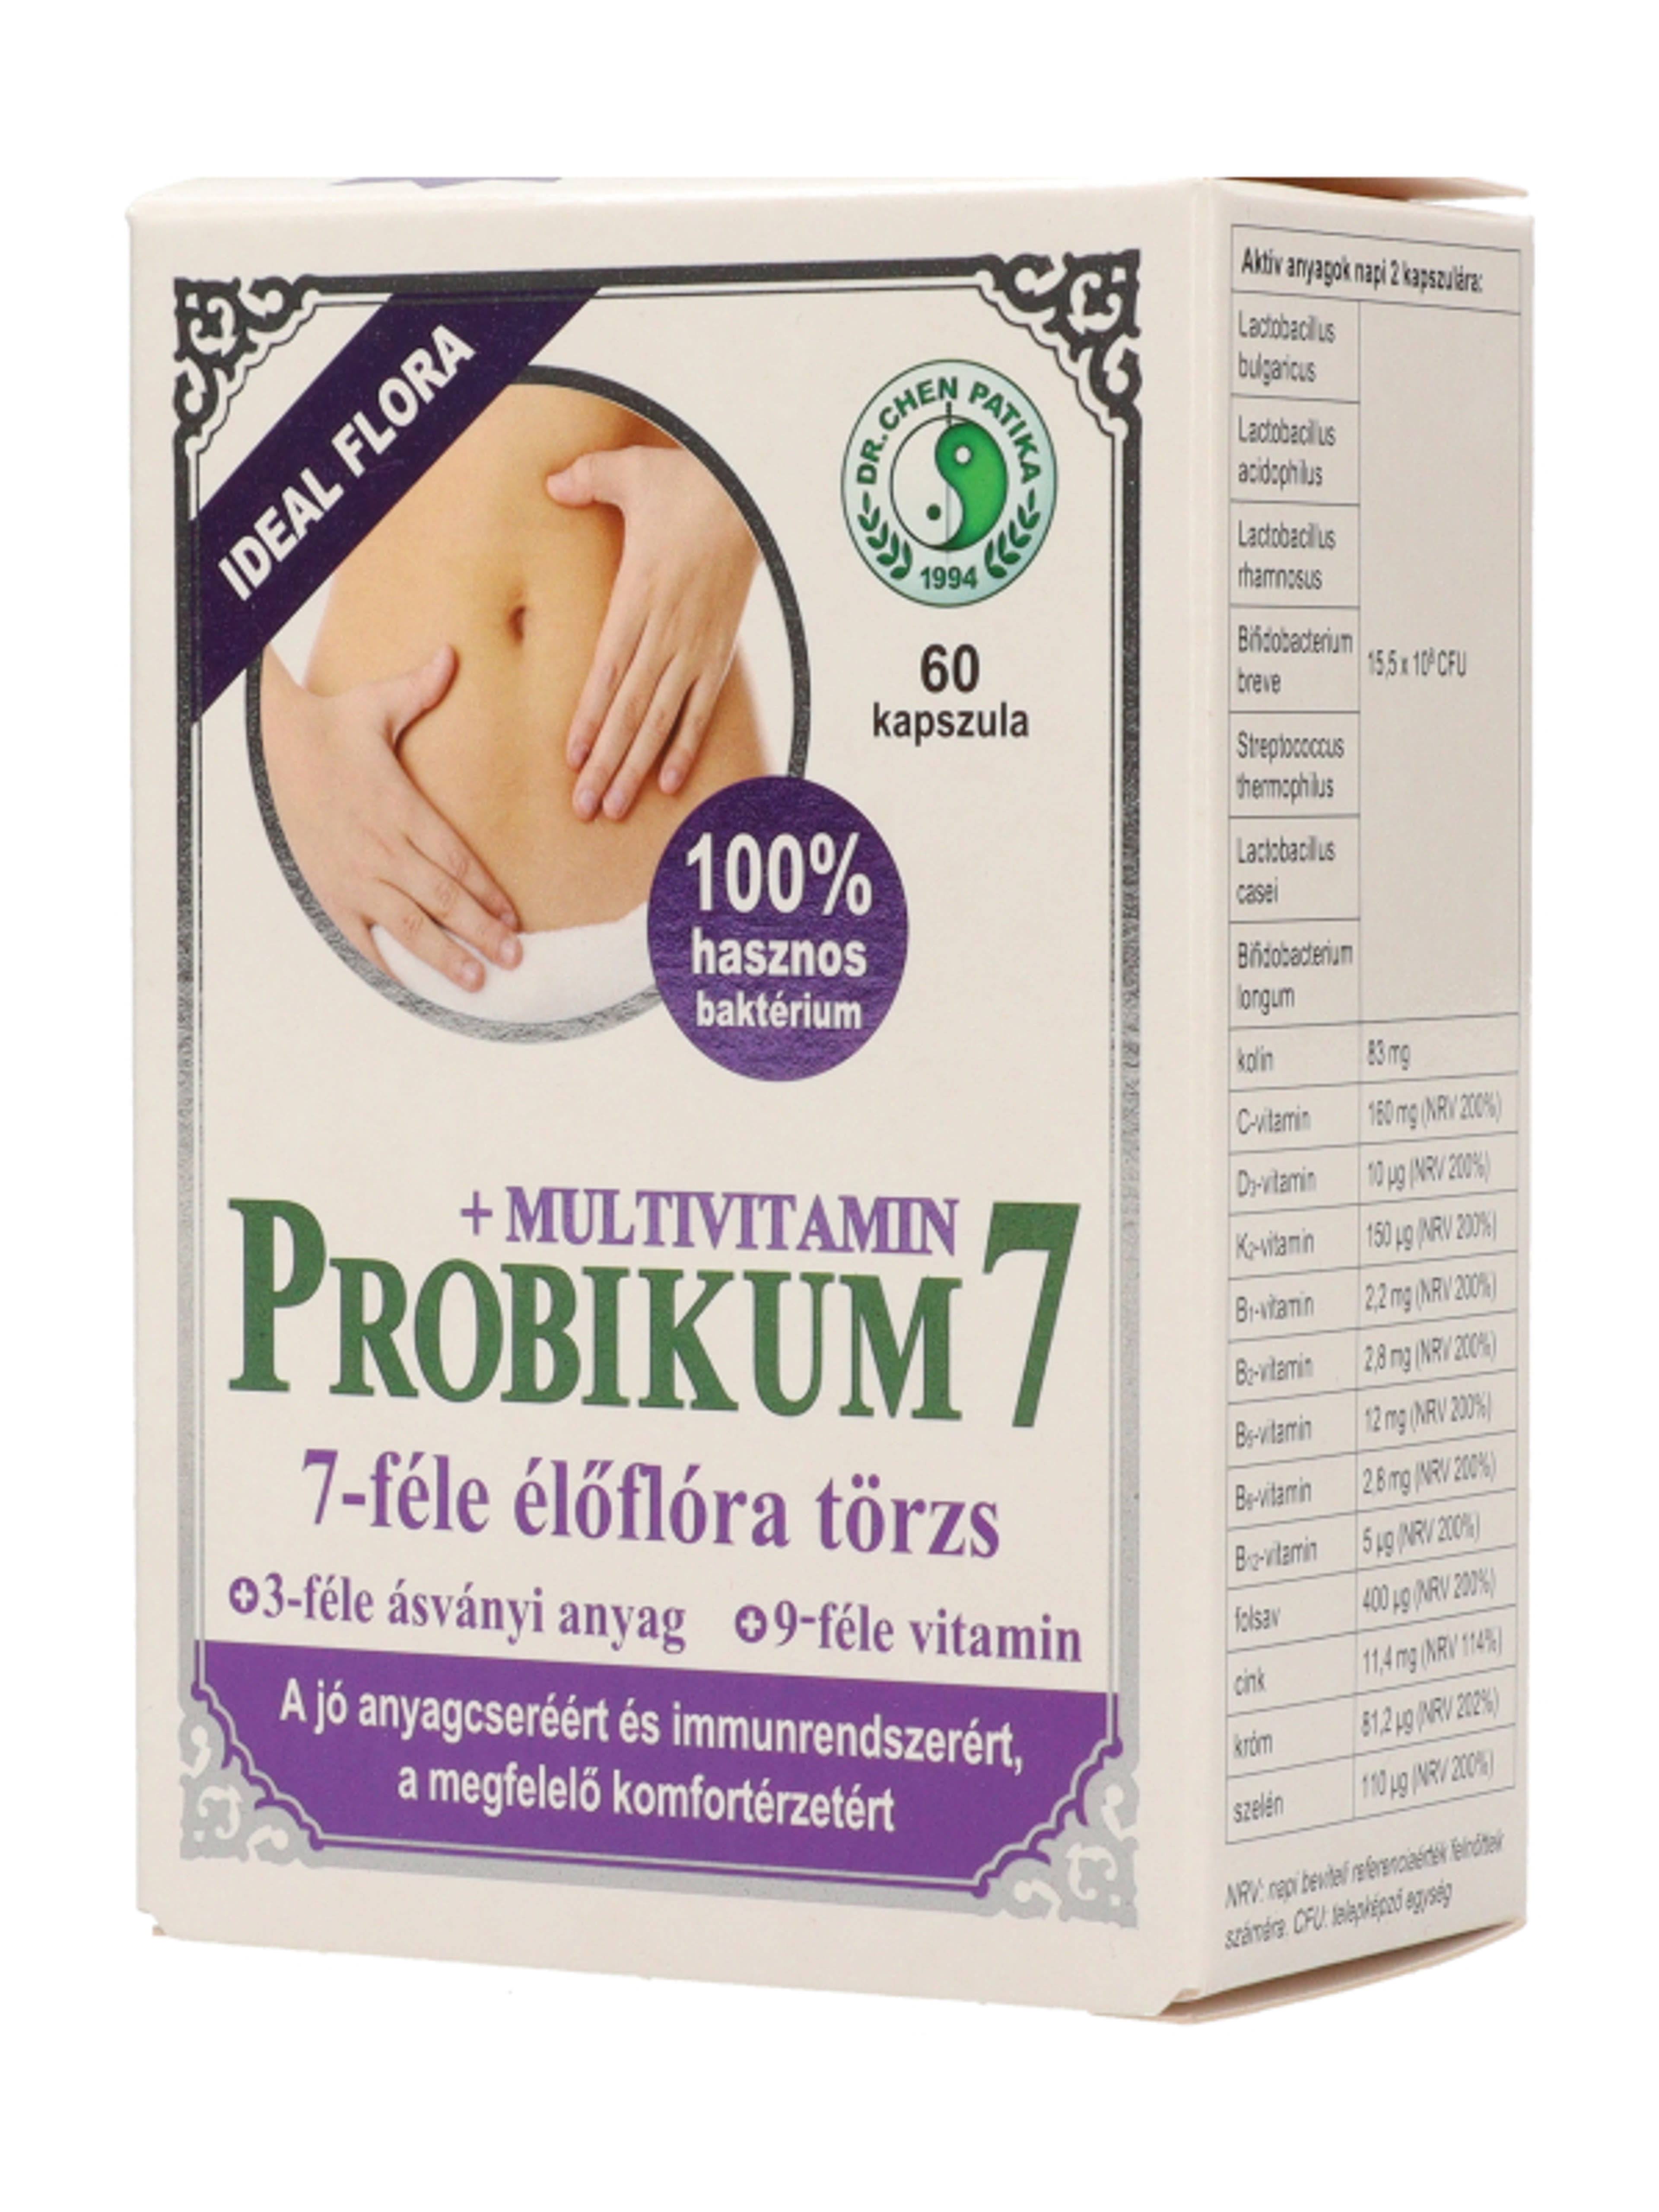 Dr.Chen Patika probiotikum 7 multivitamin kapszula - 60 db-2